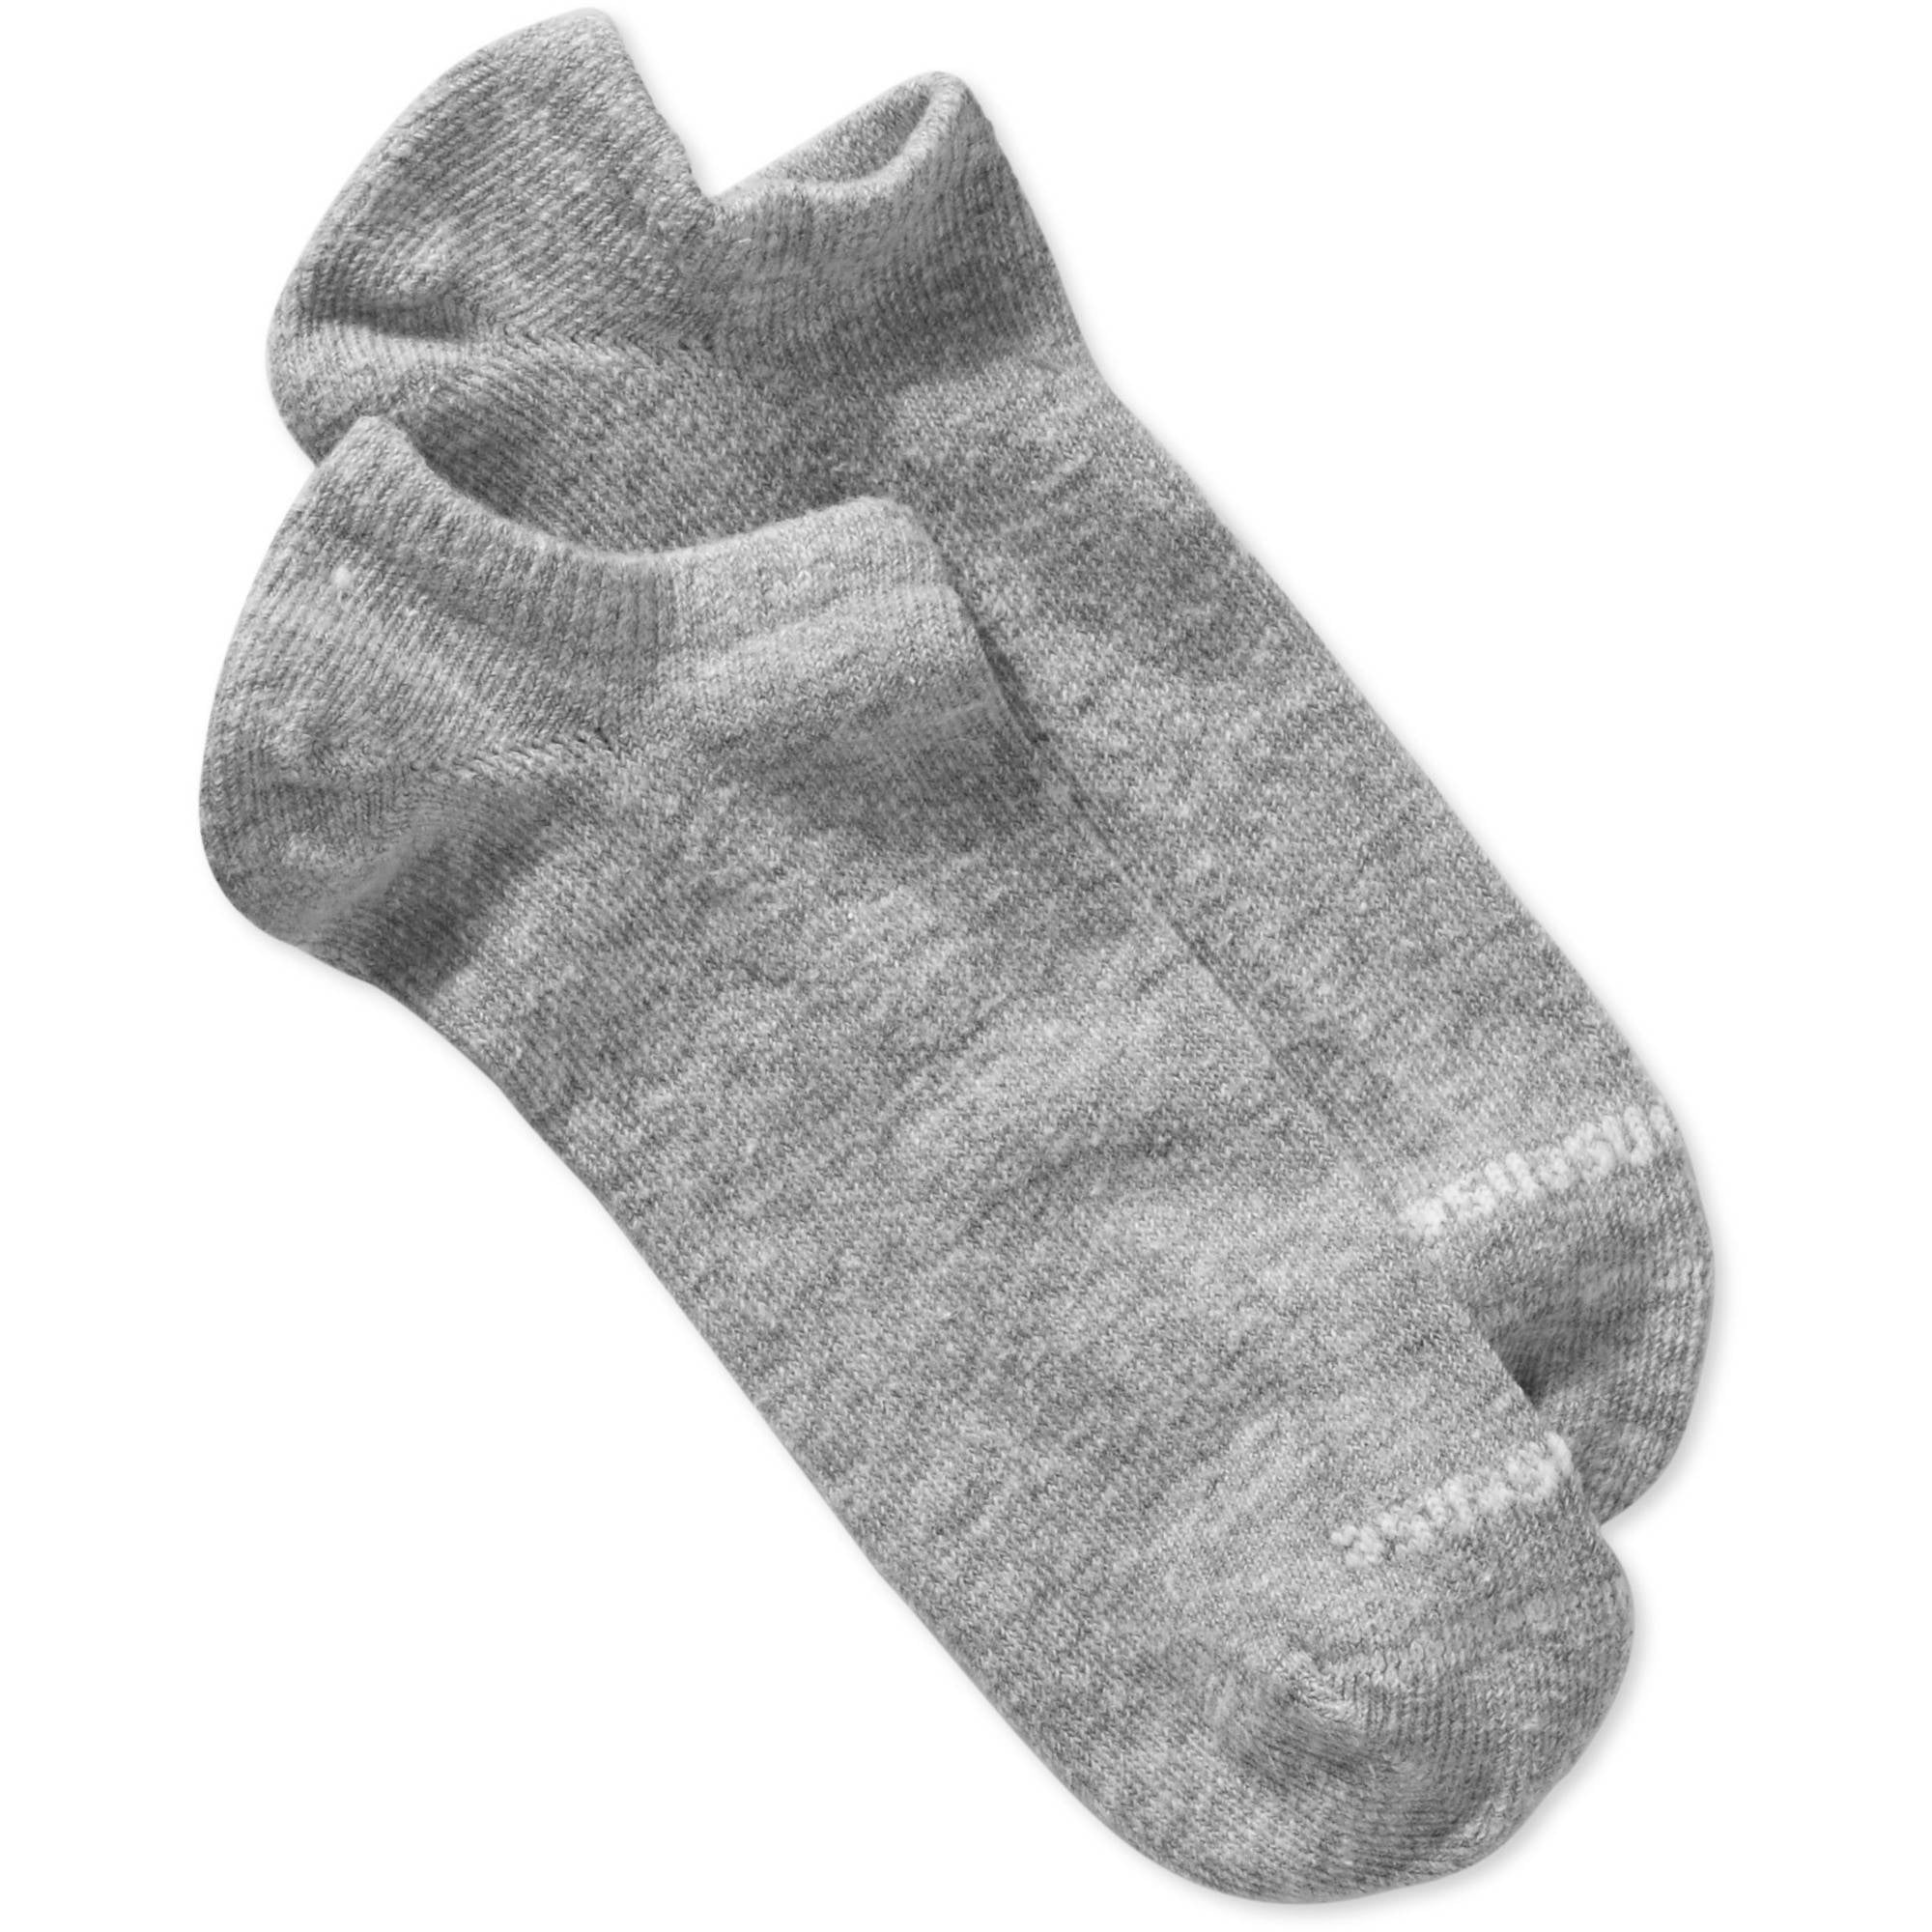 Women's Soft & Sensible Uncush No Show Socks - 6 Pack - Walmart.com